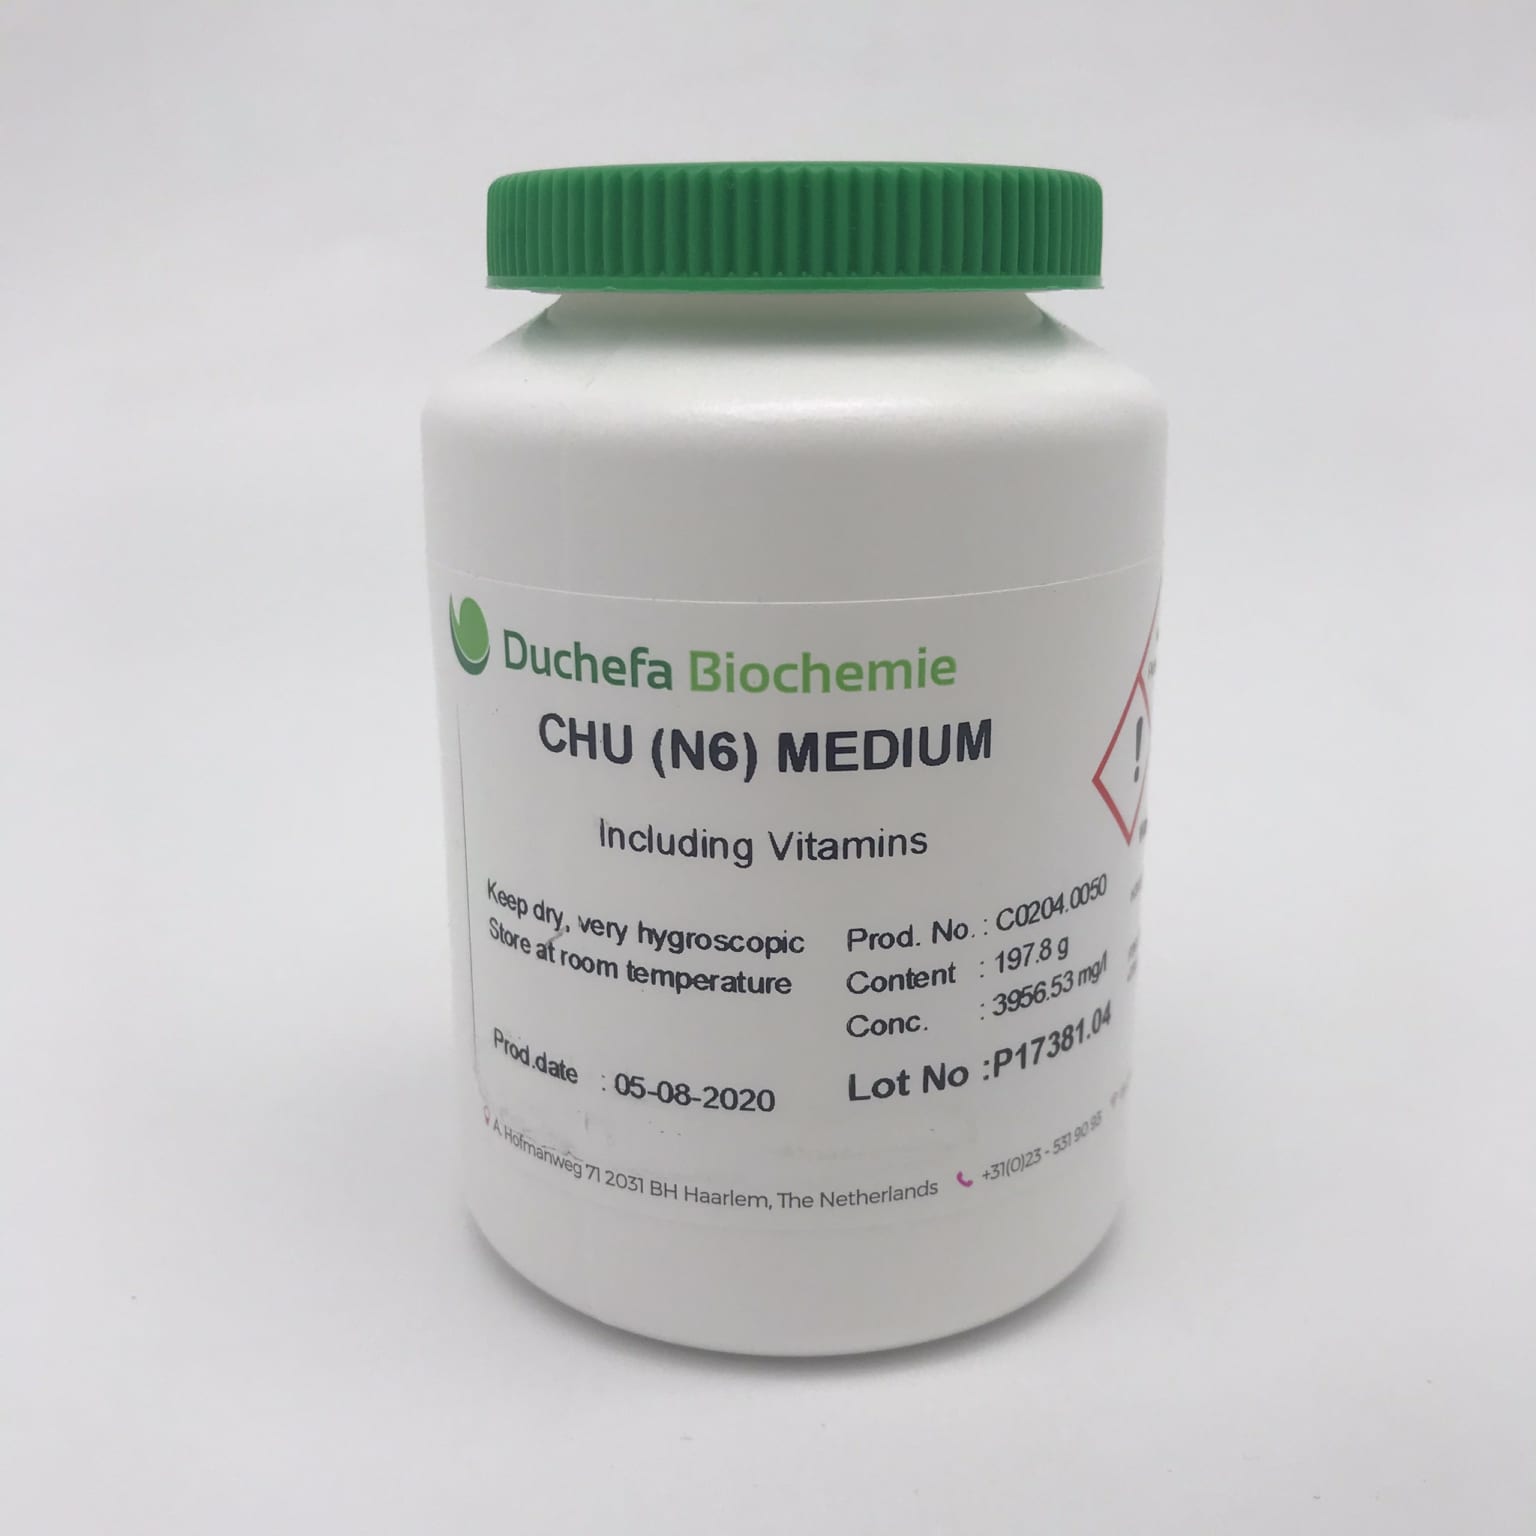 CHU (N6) Medium Indluding Vitamins